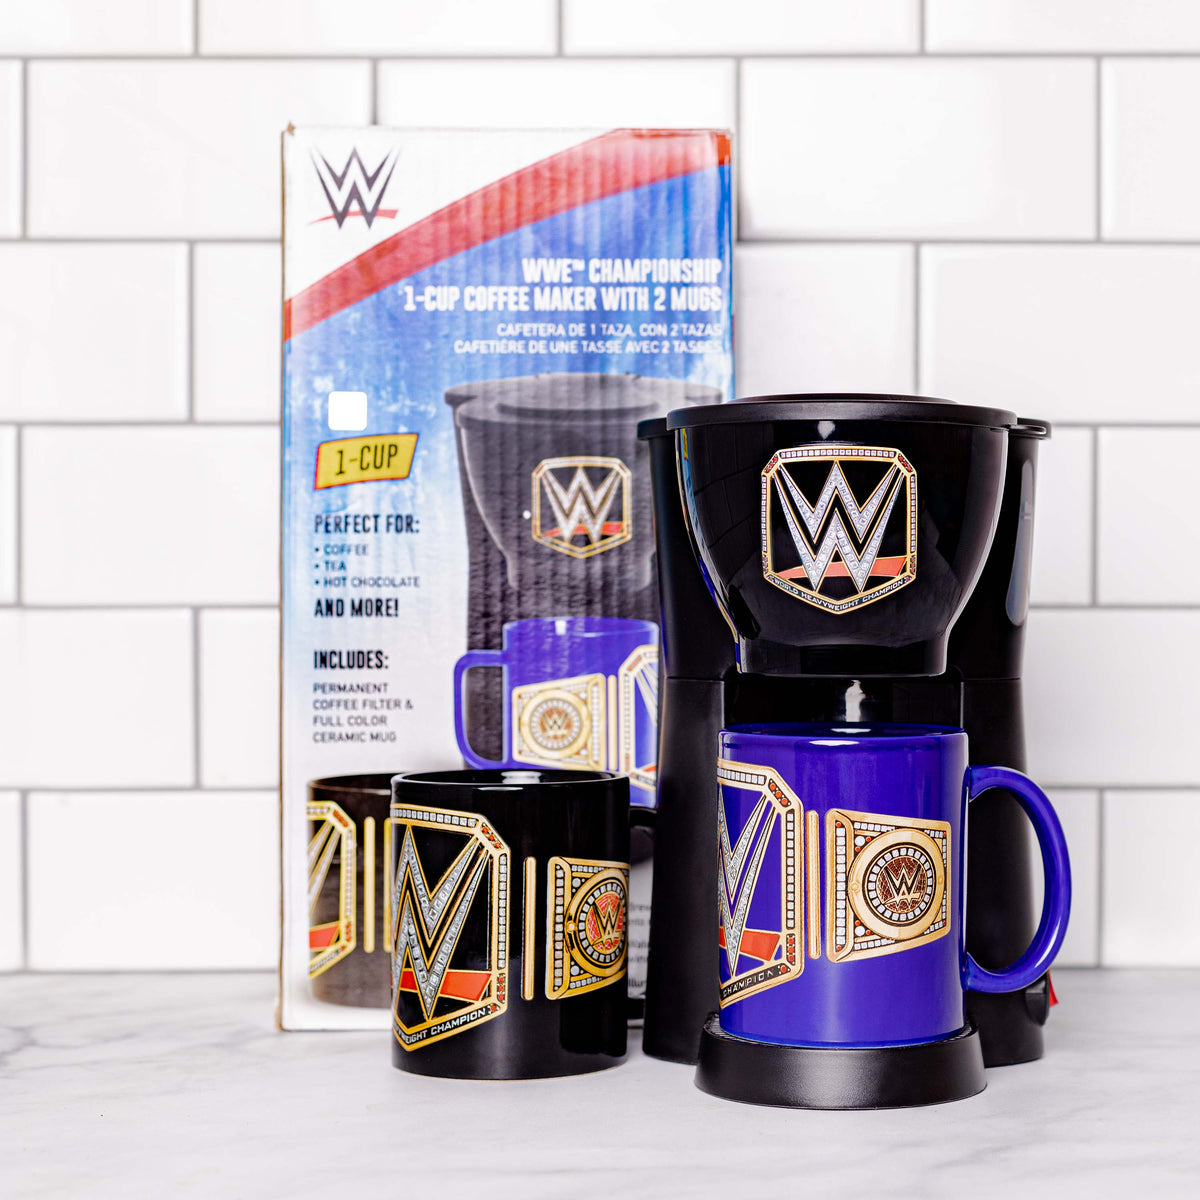 Coffee Percolator And Mugs Kit Perfect For